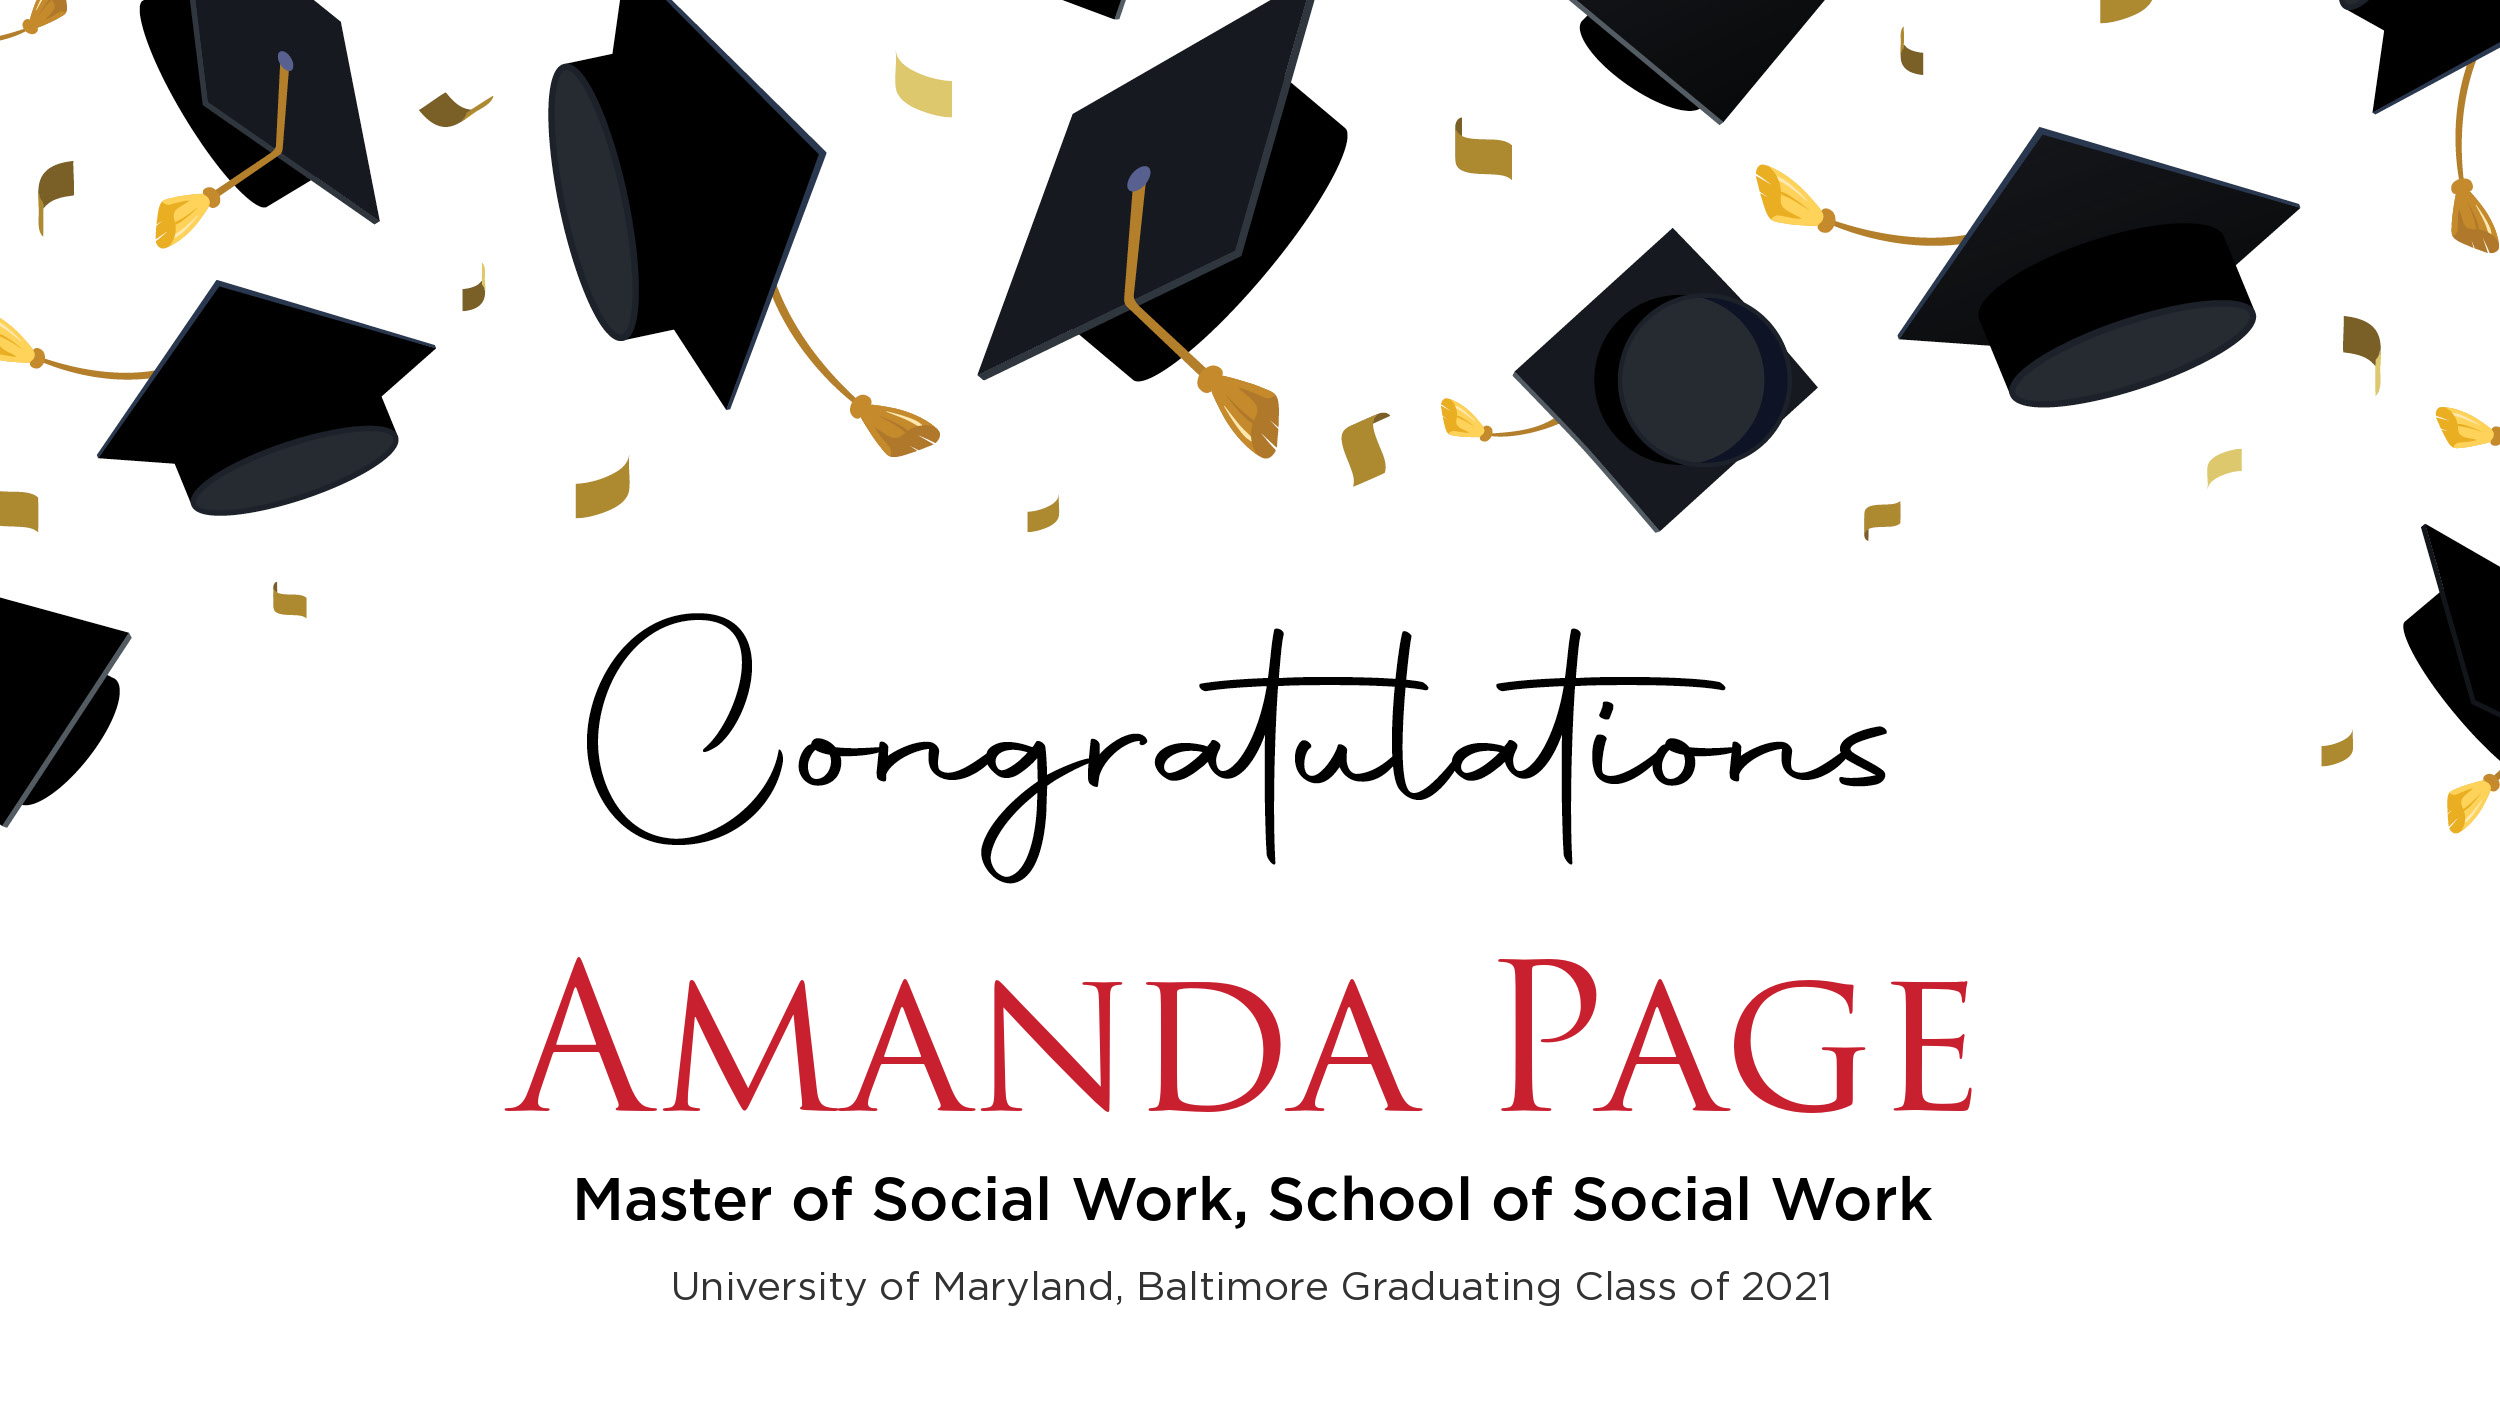 Congratulations Amanda Page, Master of Social Work